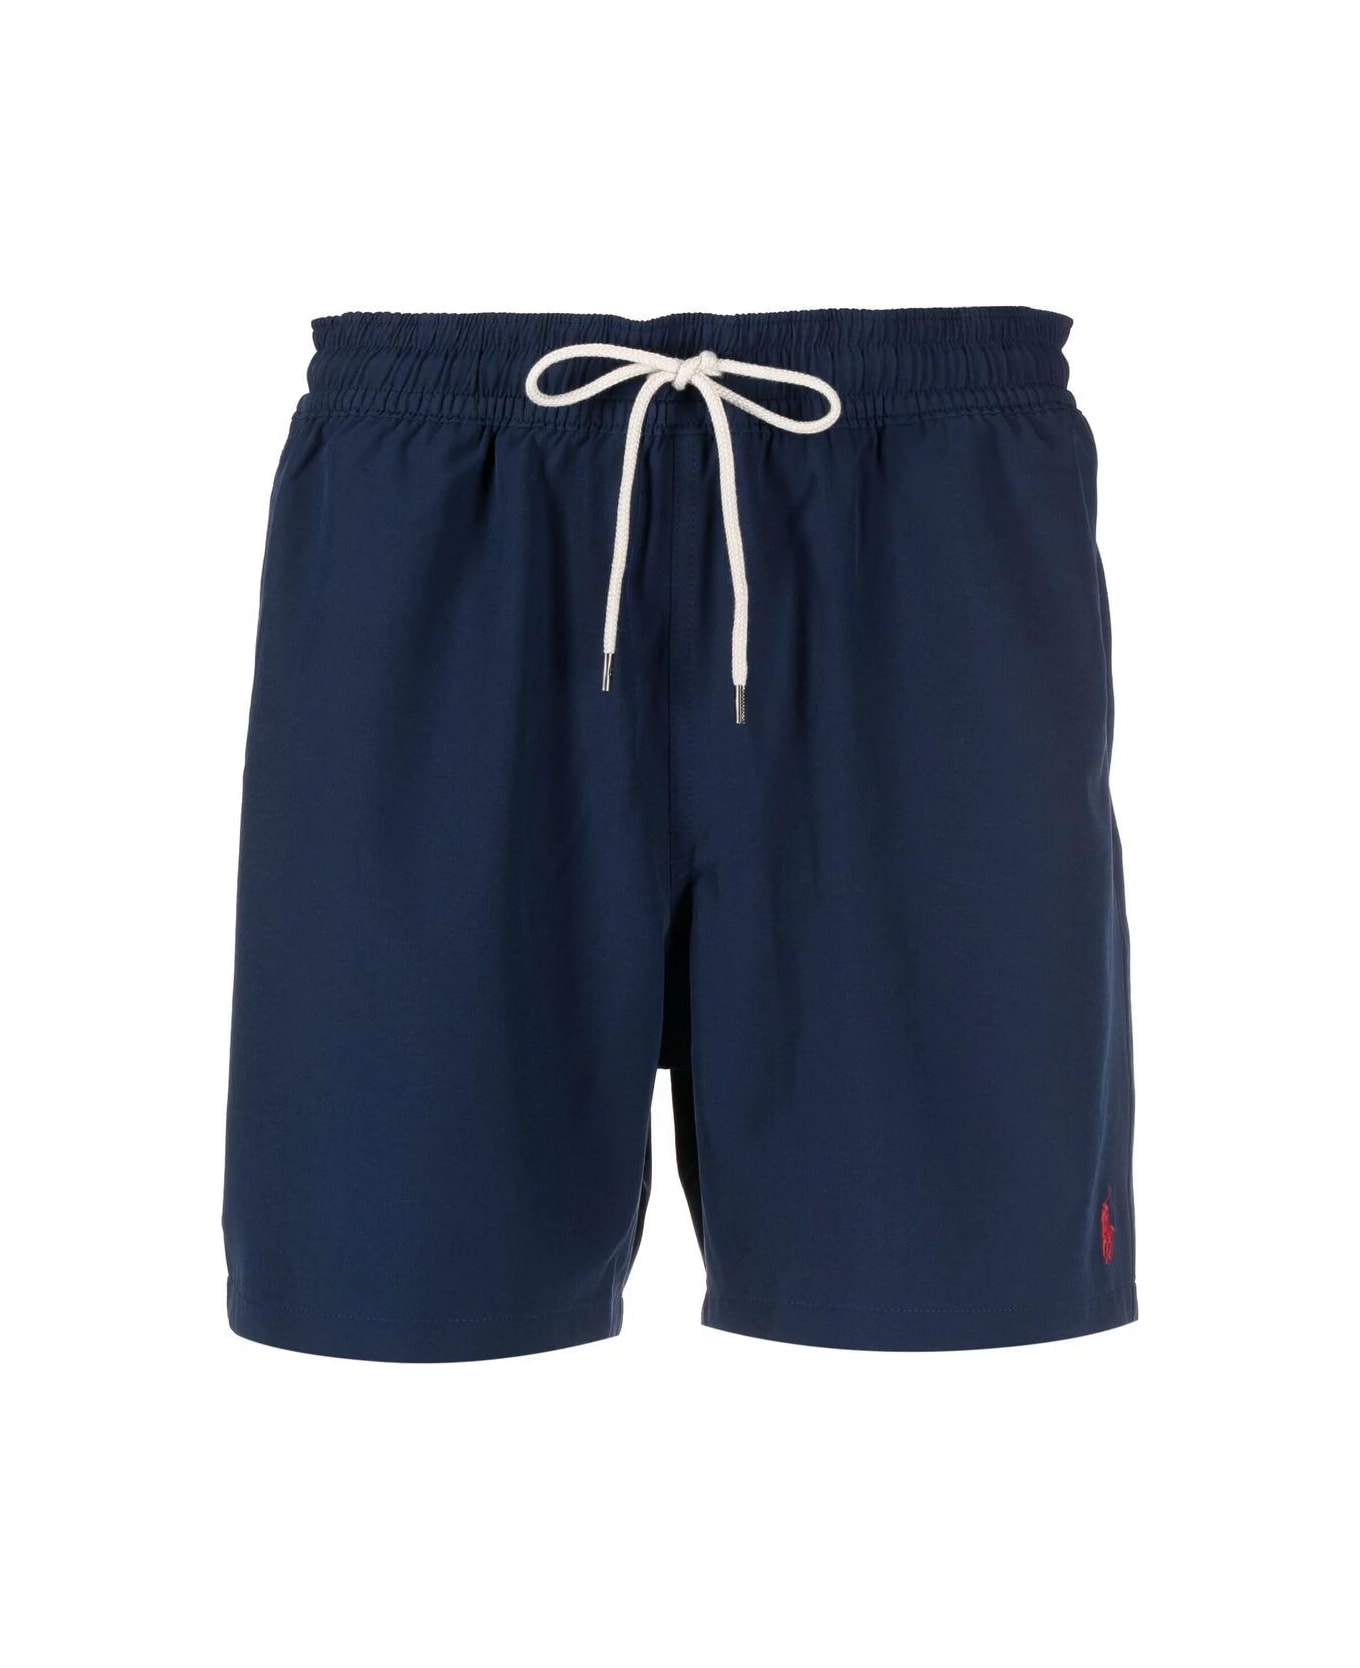 Polo Ralph Lauren Swimshorts - Newport Navy スーツ